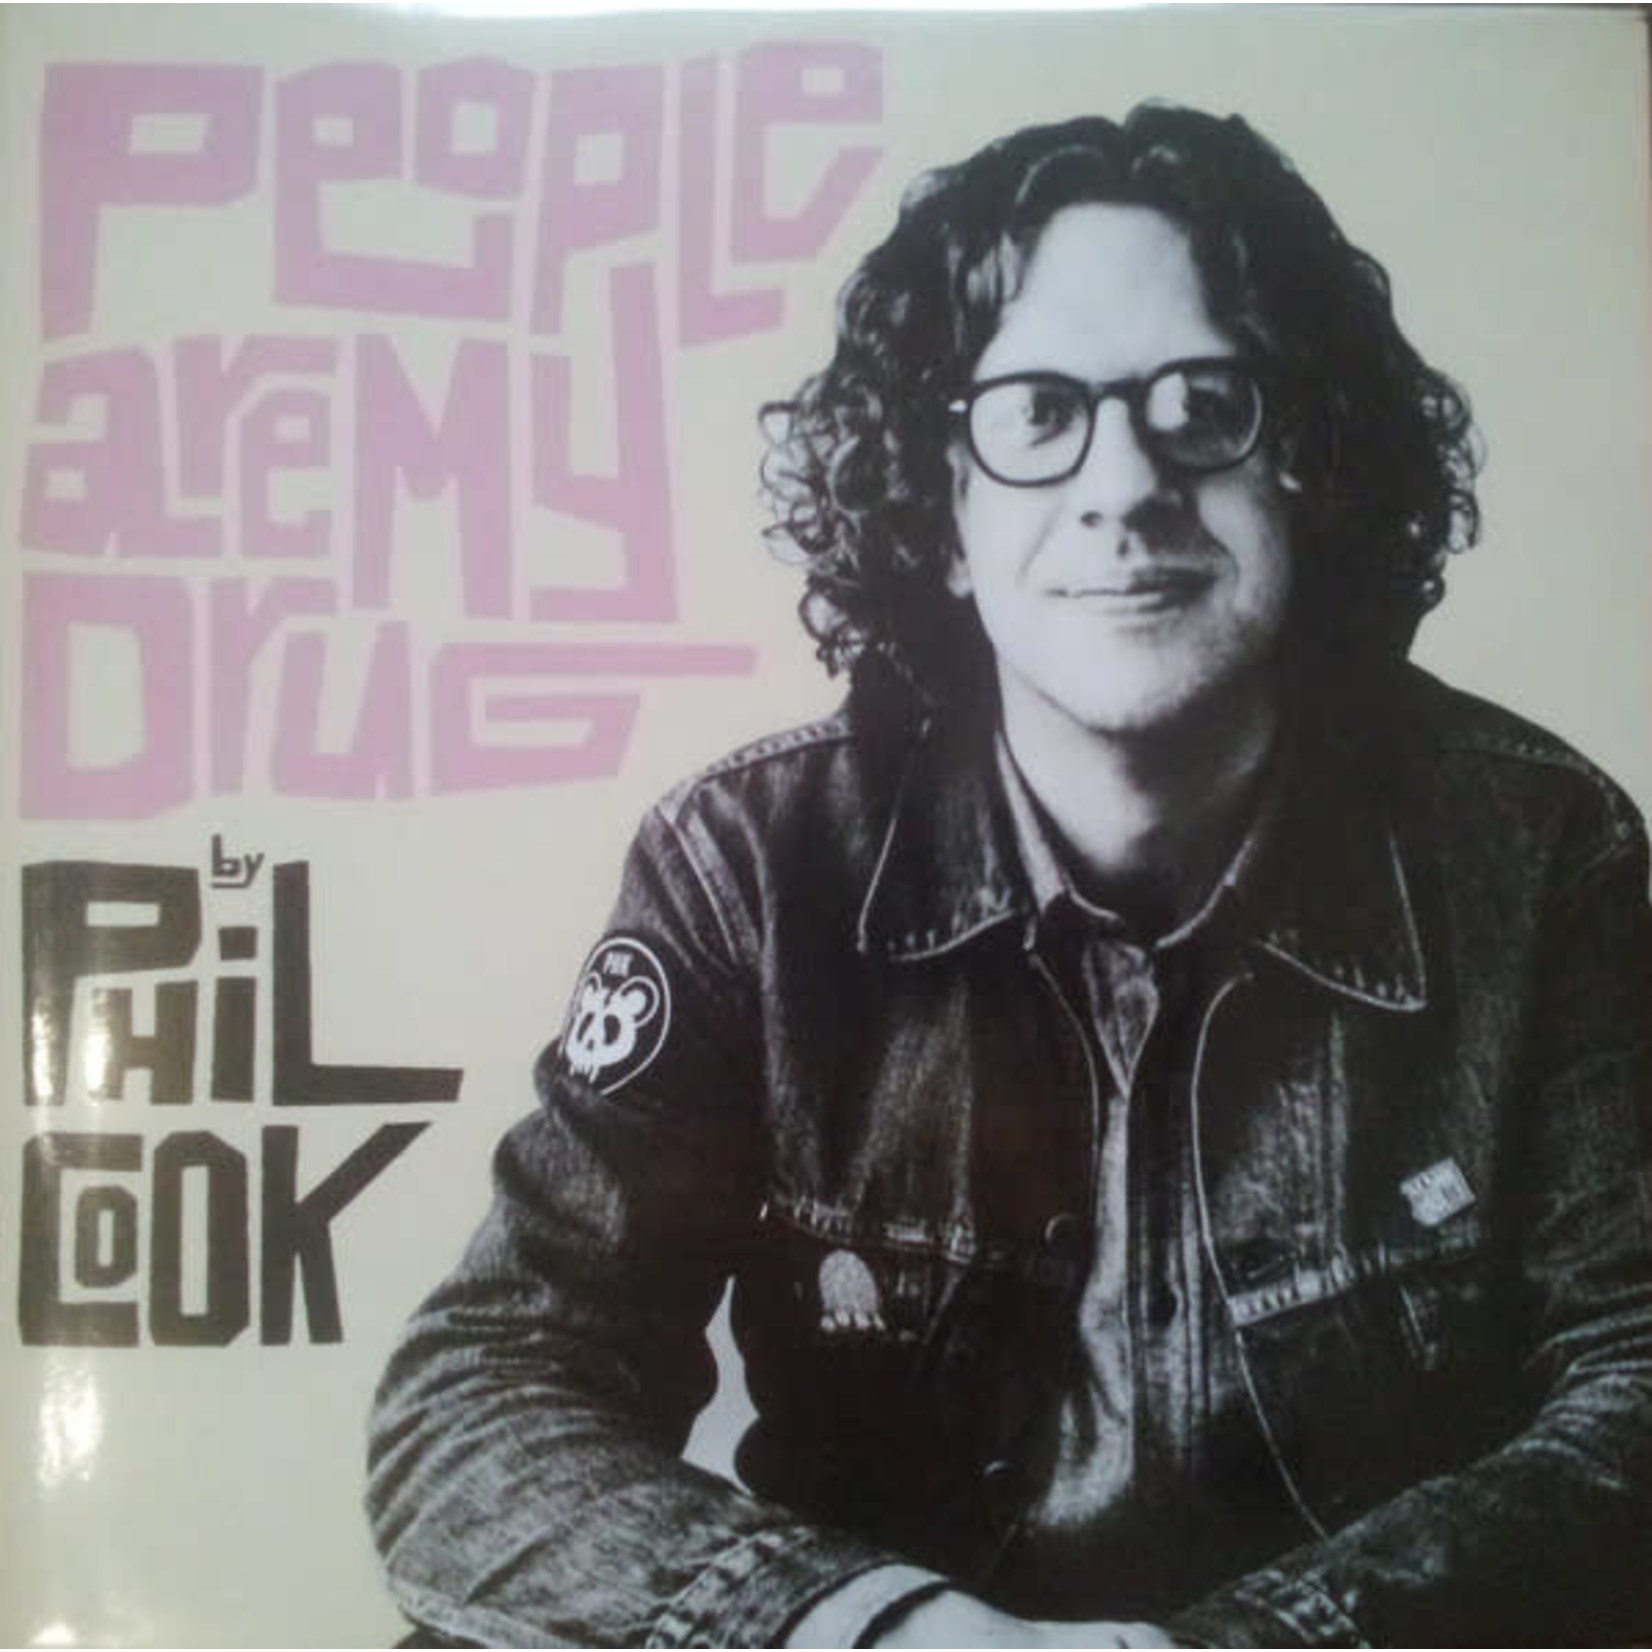 Psychic Hotline Phil Cook - People Are My Drug (LP) {NM/VG+}